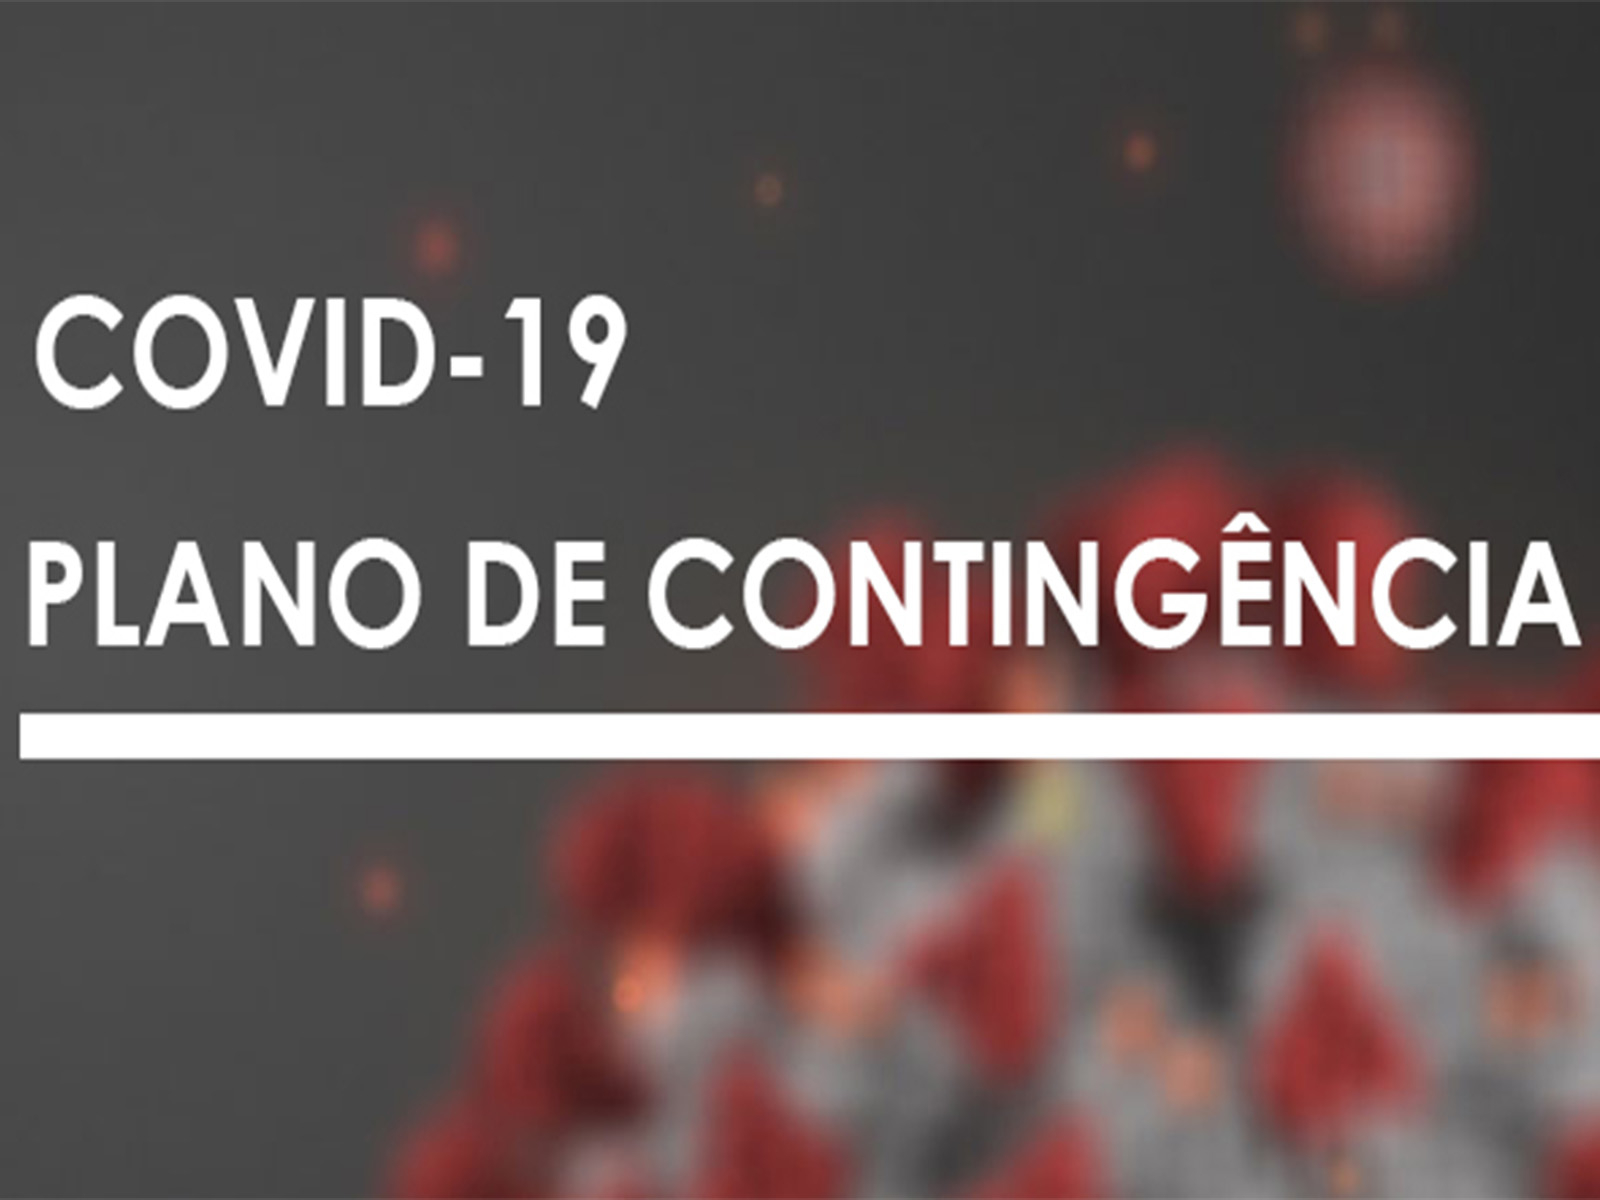 Plano de contingência - COVID-19